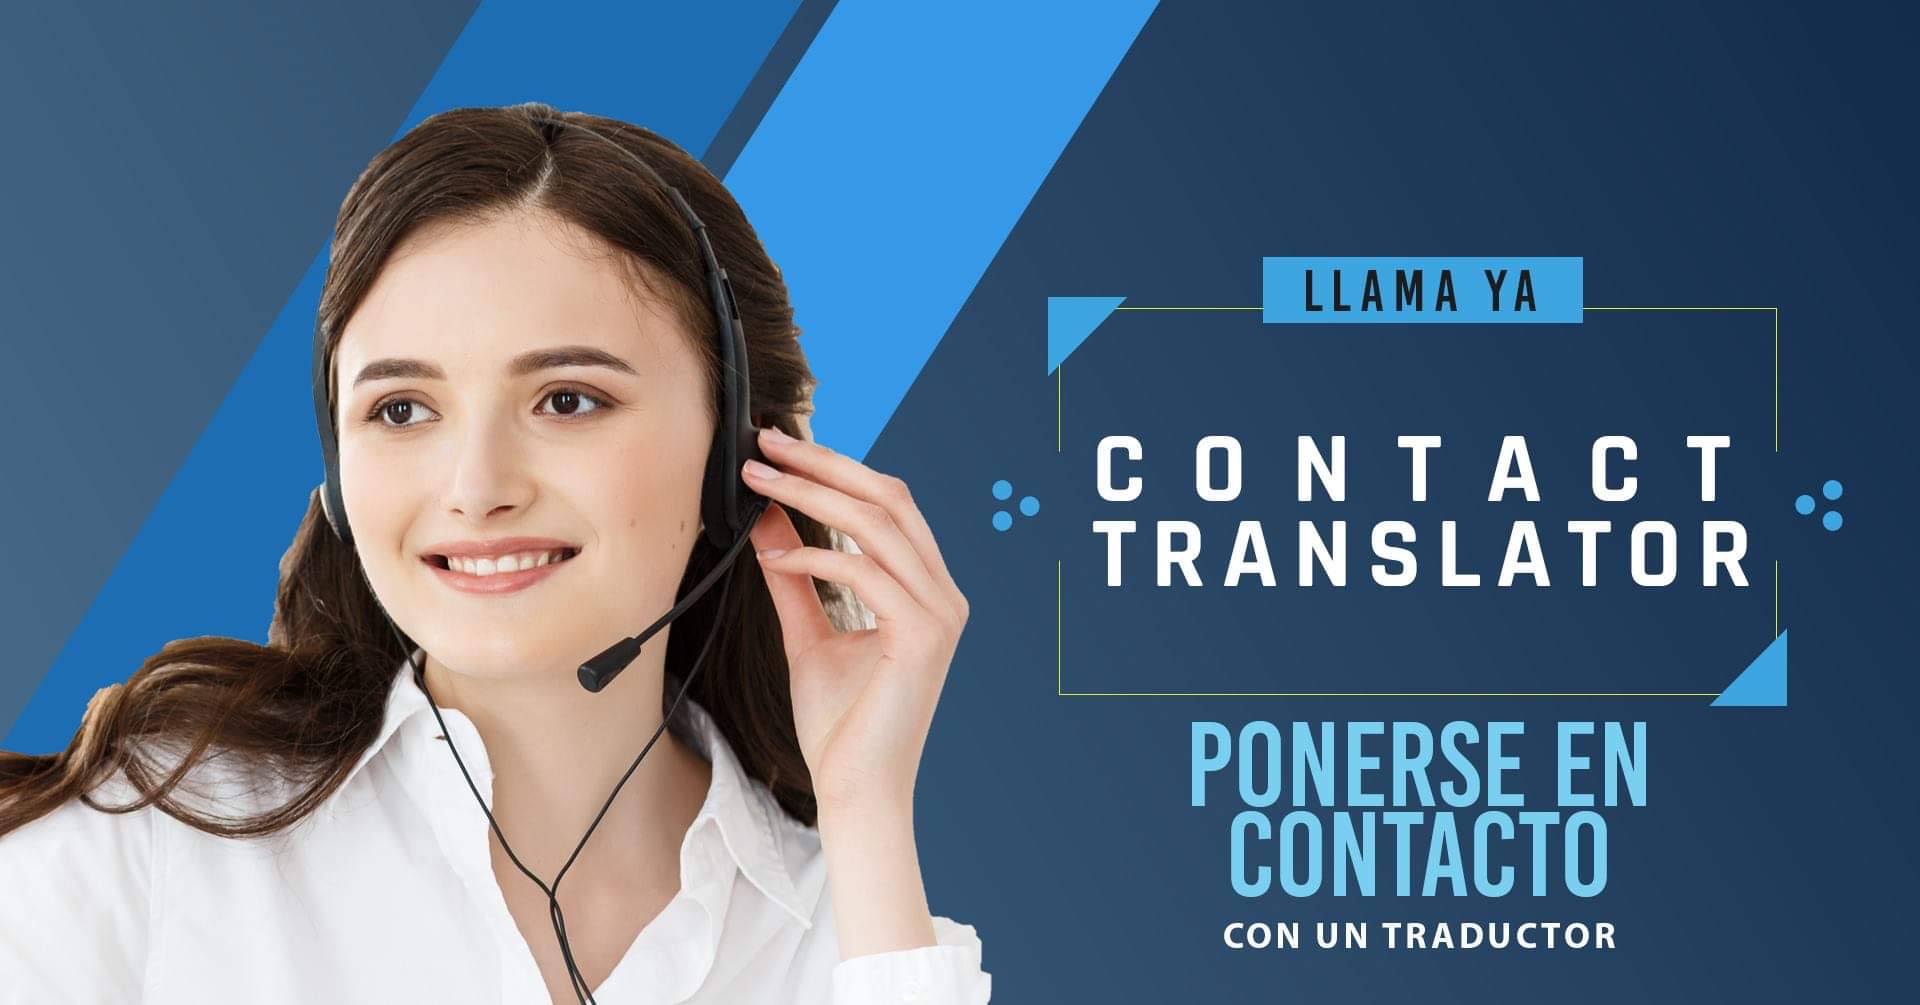 Contact a Translator